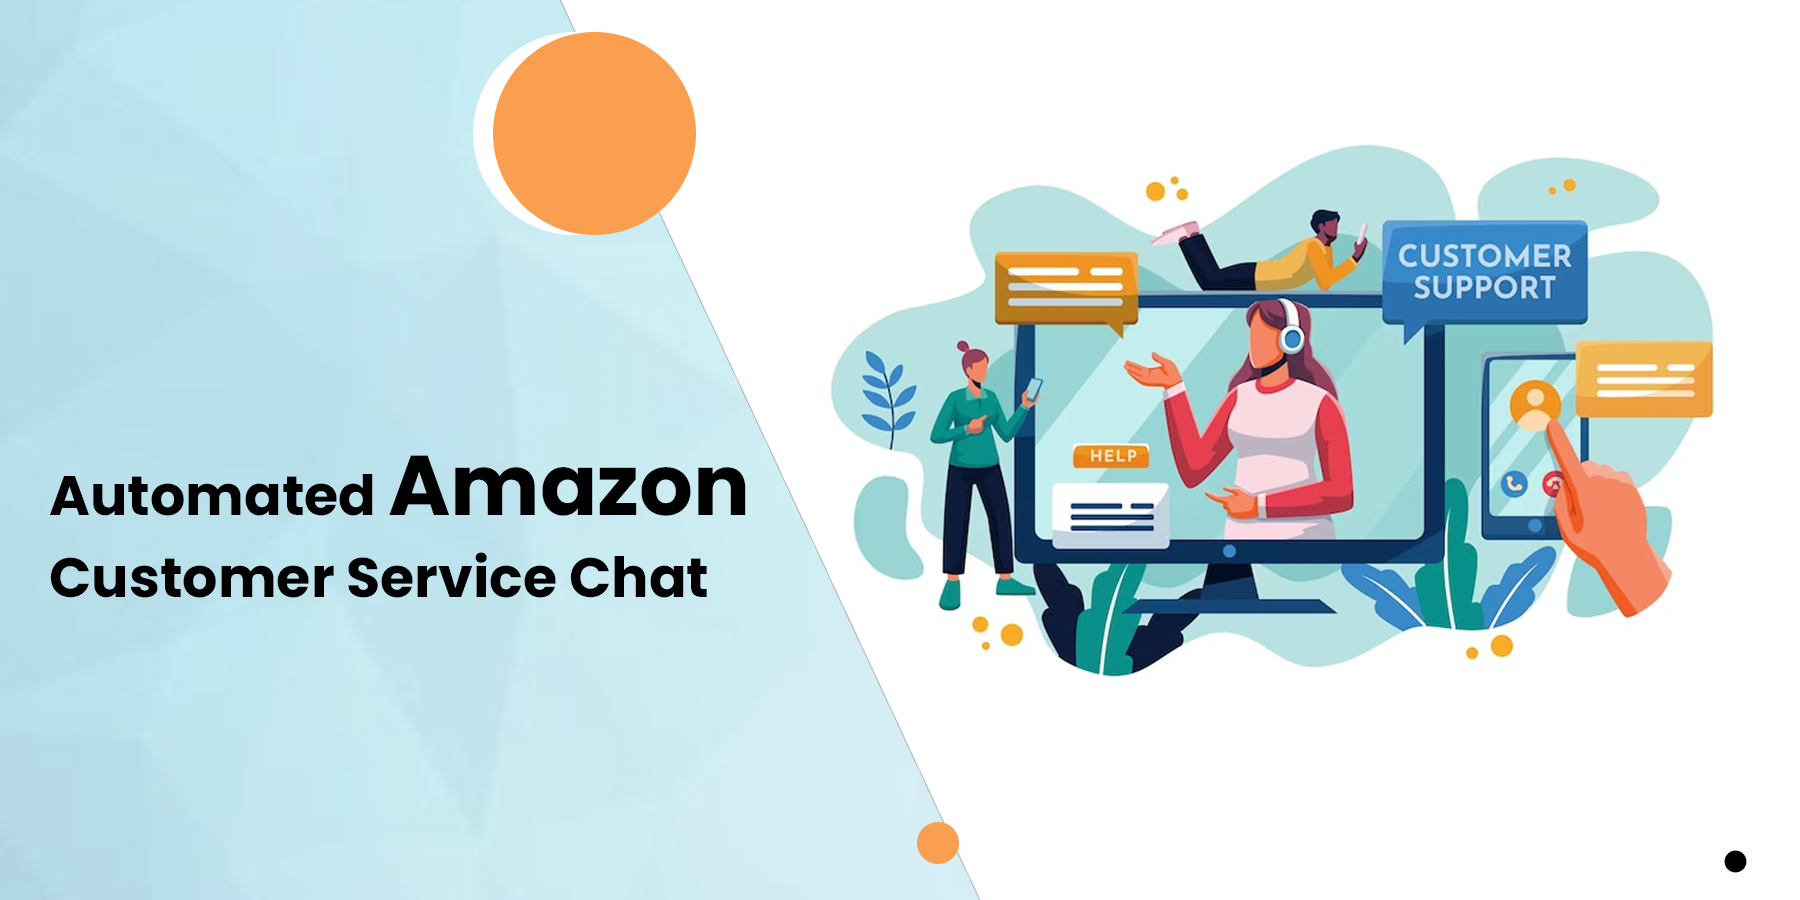 Automated Amazon Customer Service Chat